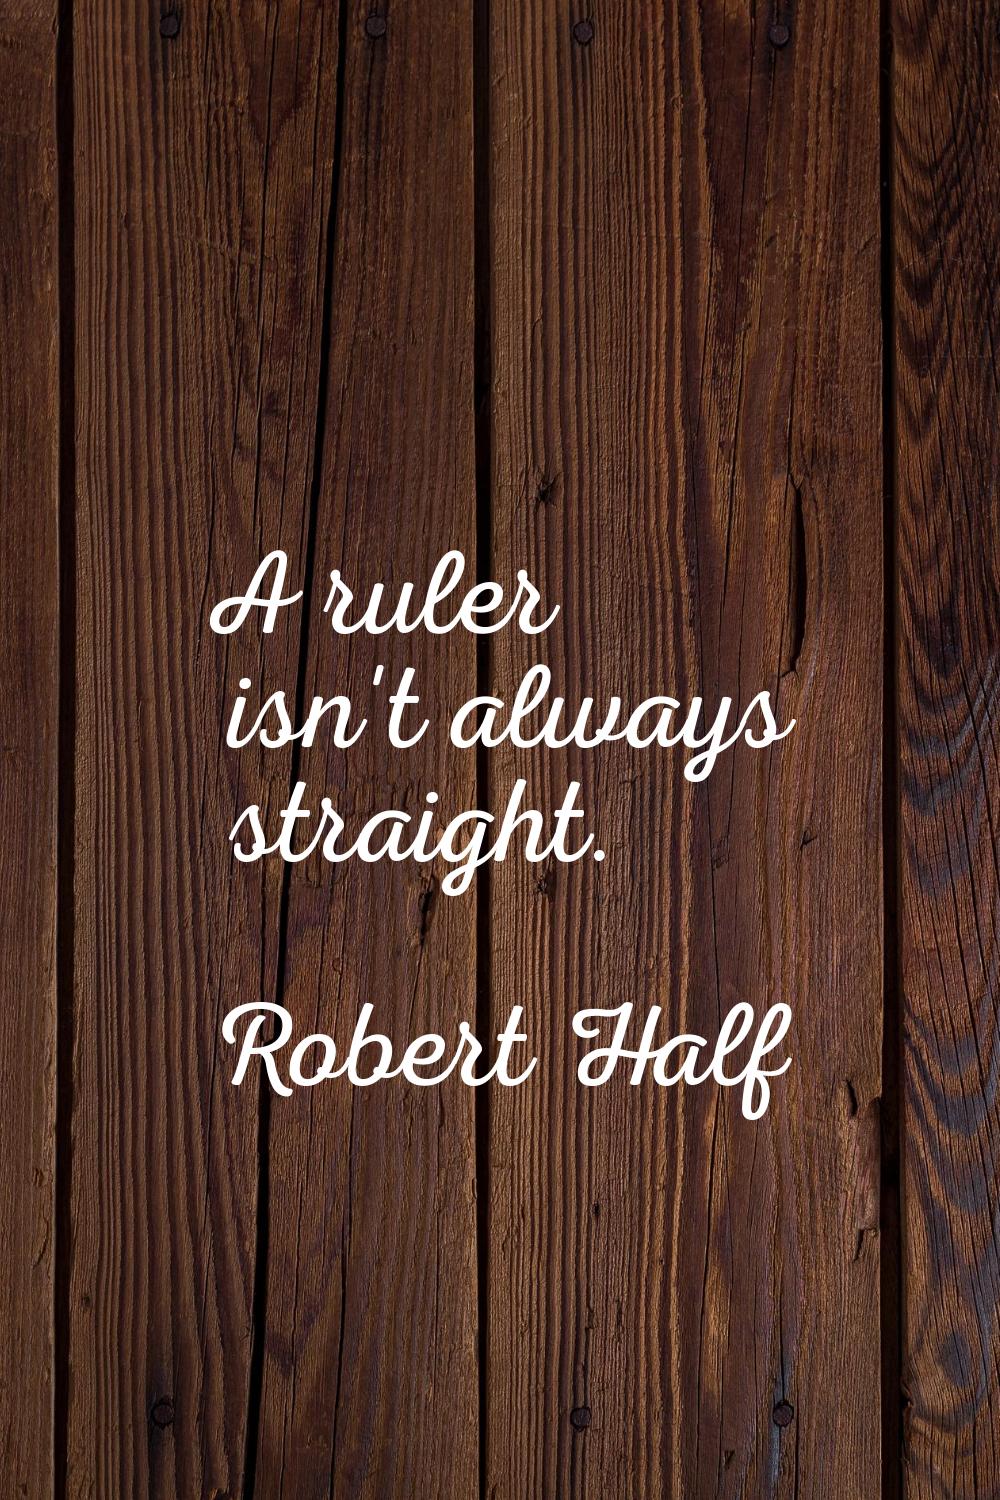 A ruler isn't always straight.